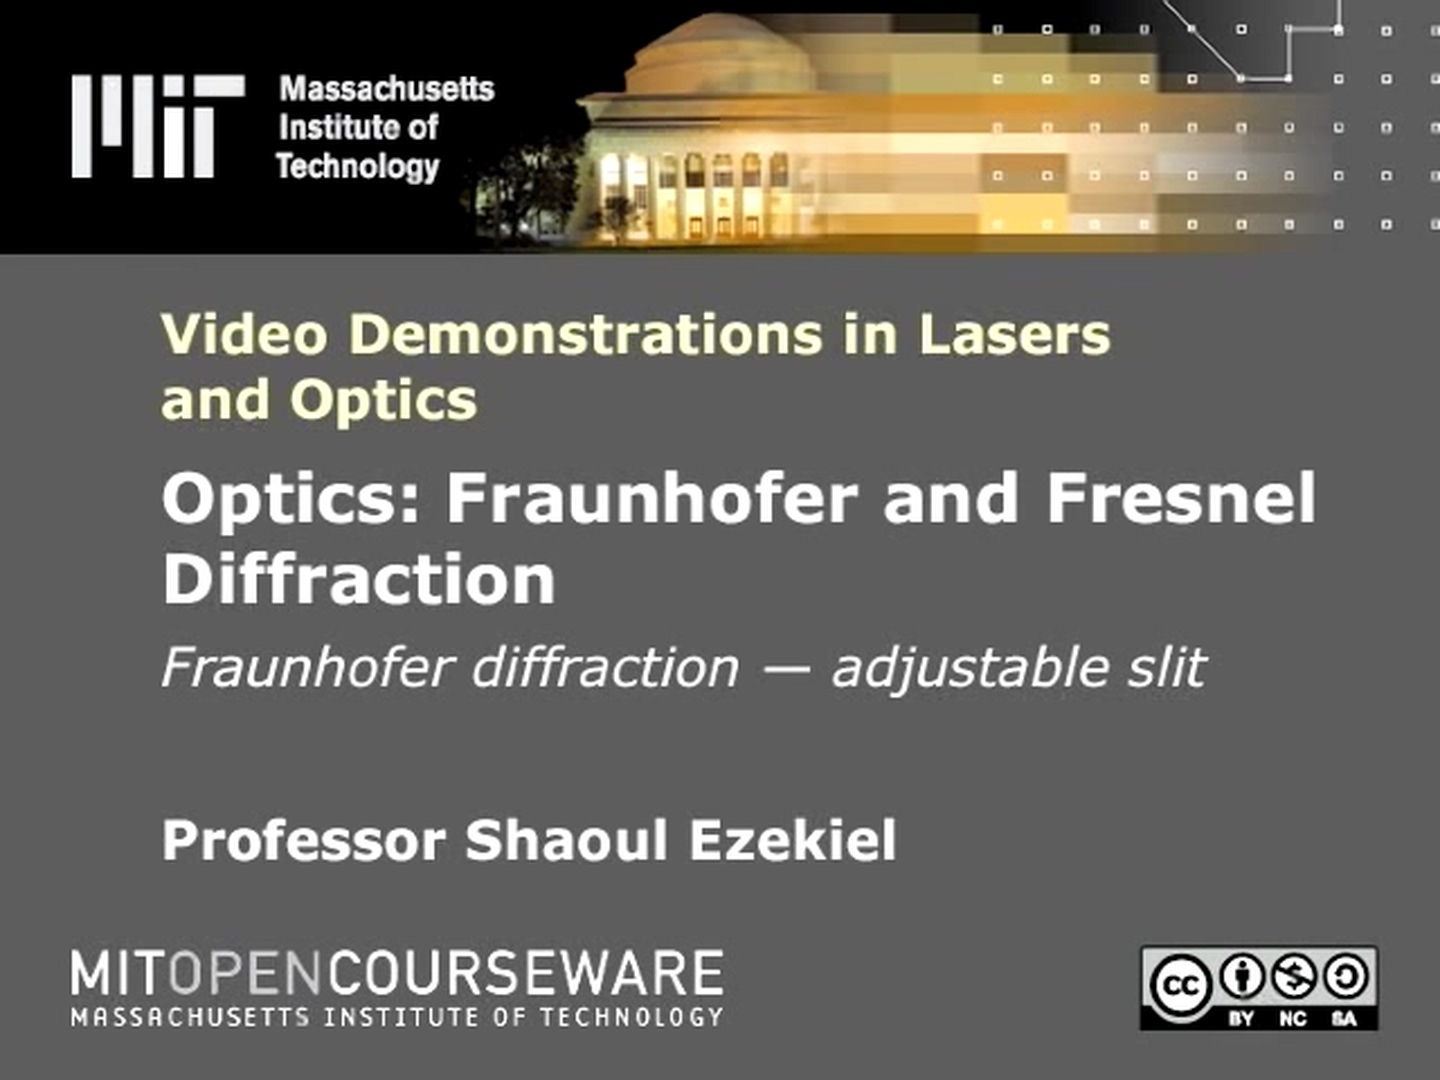 Optics - Fraunhofer diffraction - adjustable slit  MIT Video Demonstrations in Lasers and Optics